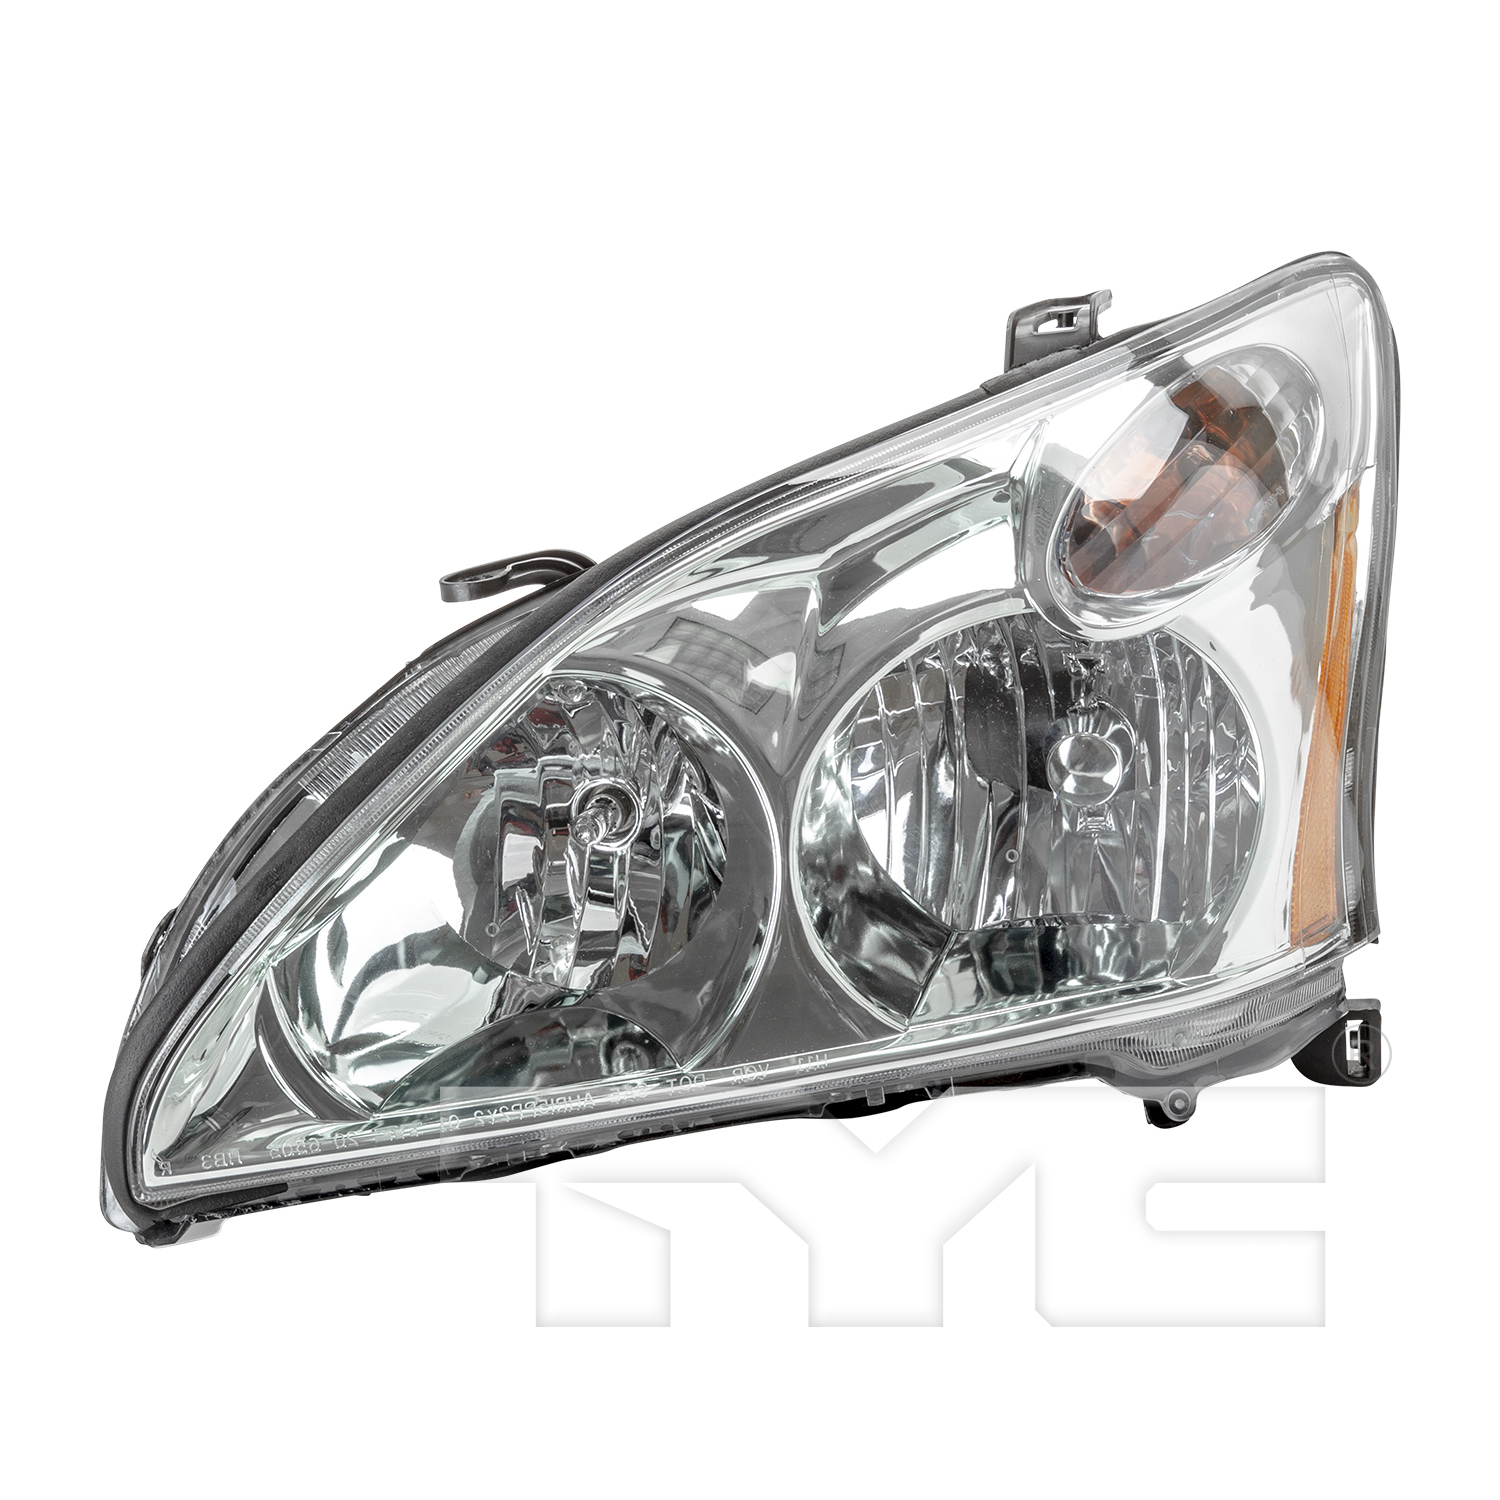 Aftermarket HEADLIGHTS for LEXUS - RX330, RX330,04-06,LT Headlamp assy composite